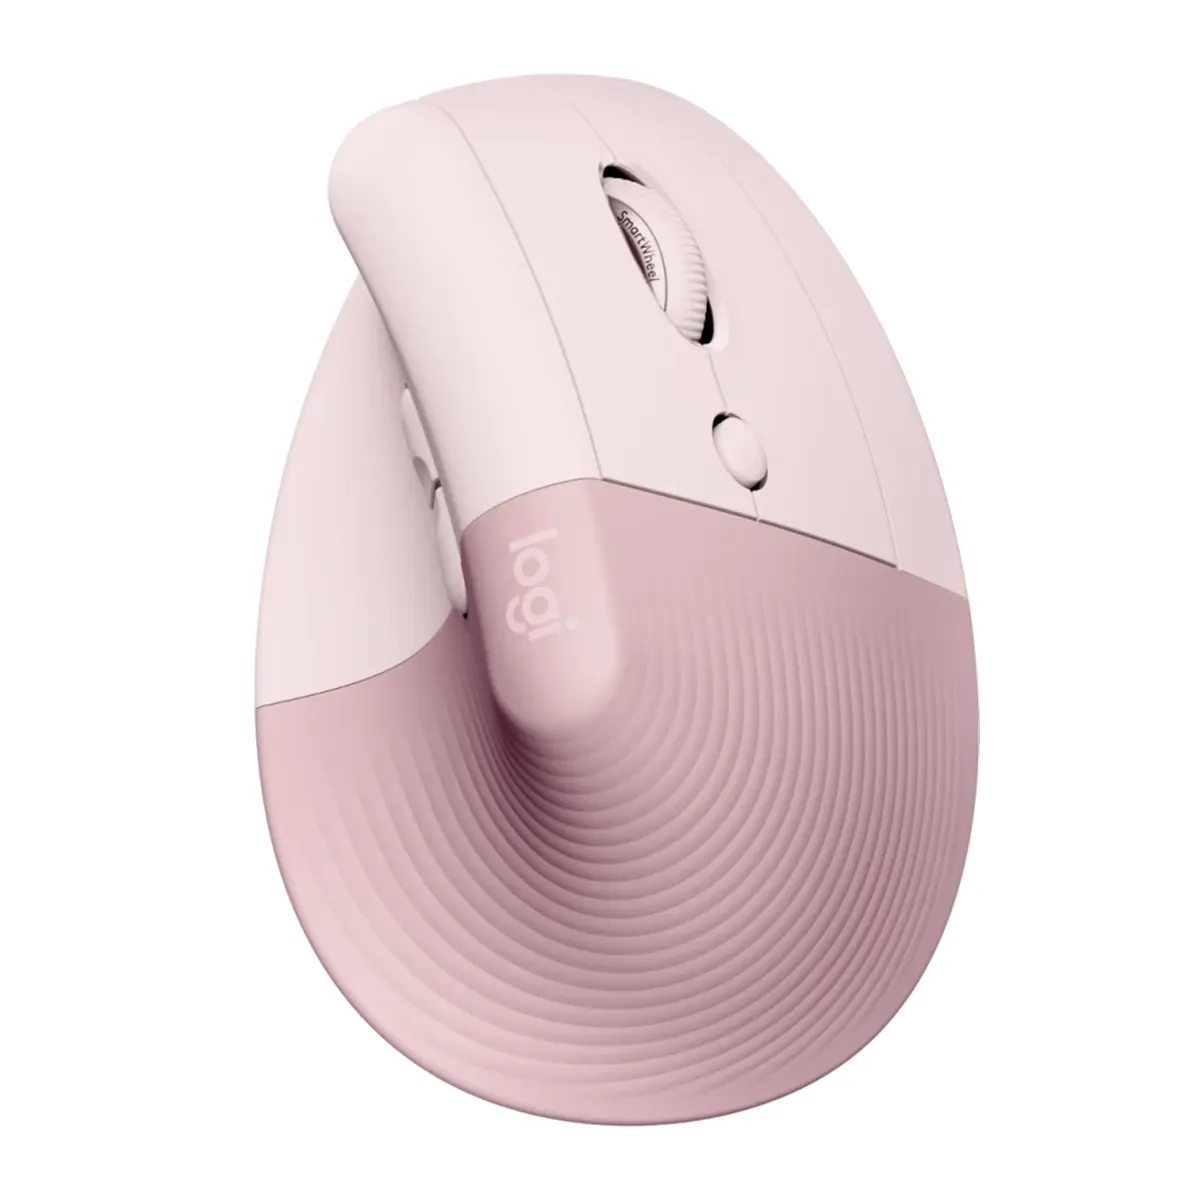 موس عمودی بی سیم لاجیتک مدل Logitech Lift Vertical Ergonomic Wireless Mouse رنگ صورتی (1)